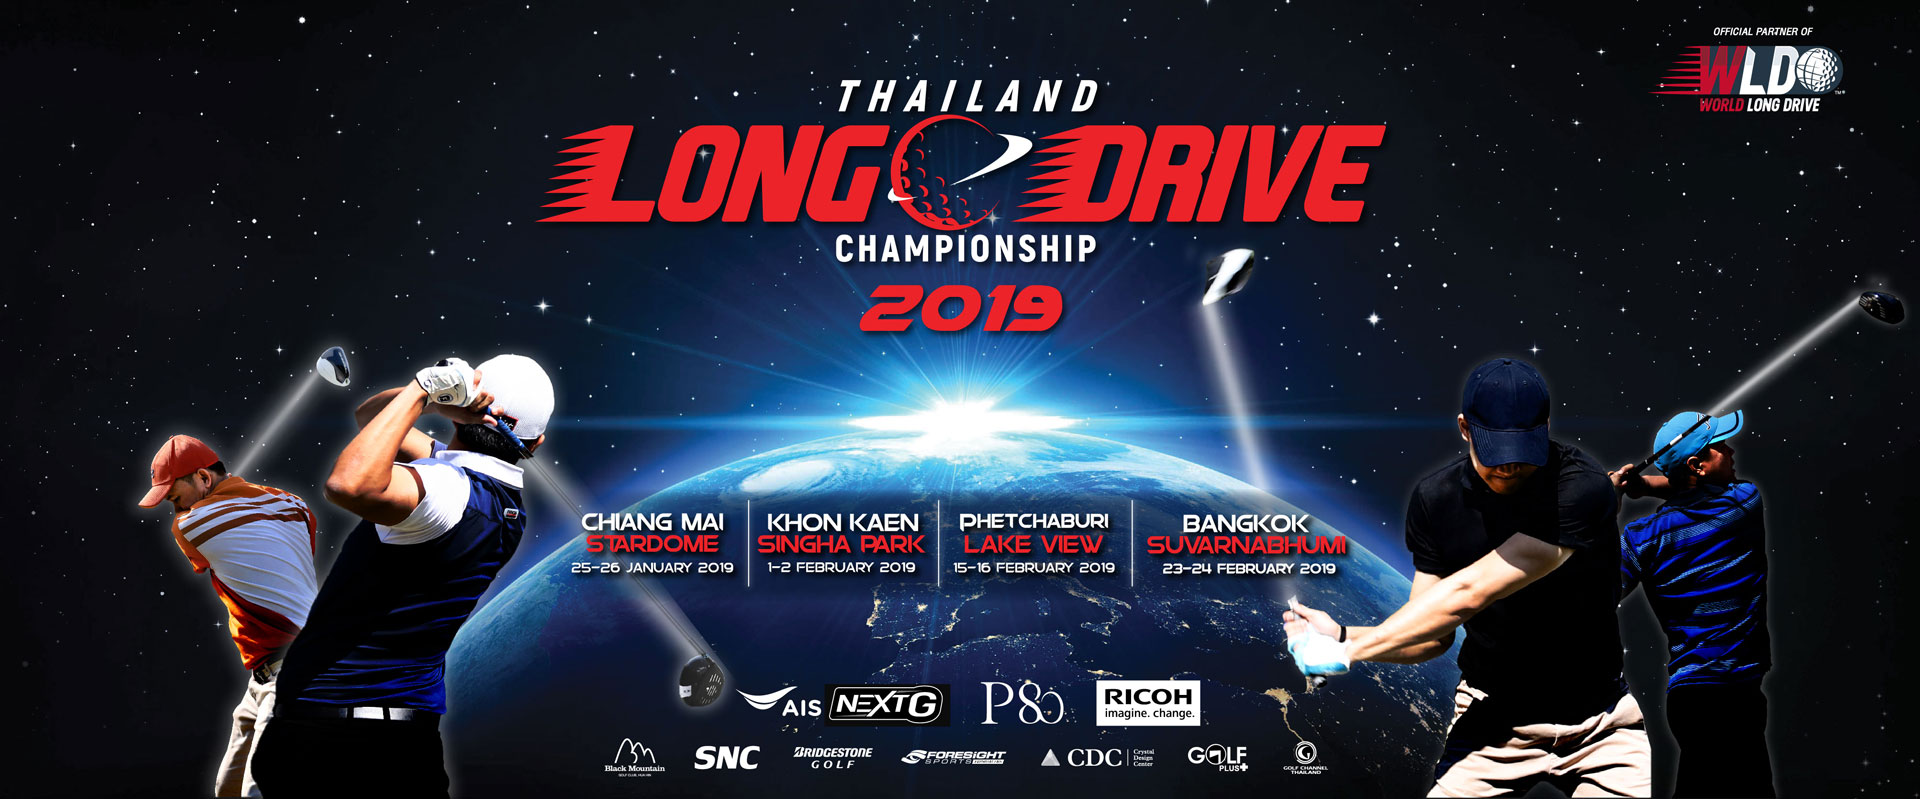 Thailand Long Drive Championship 2019